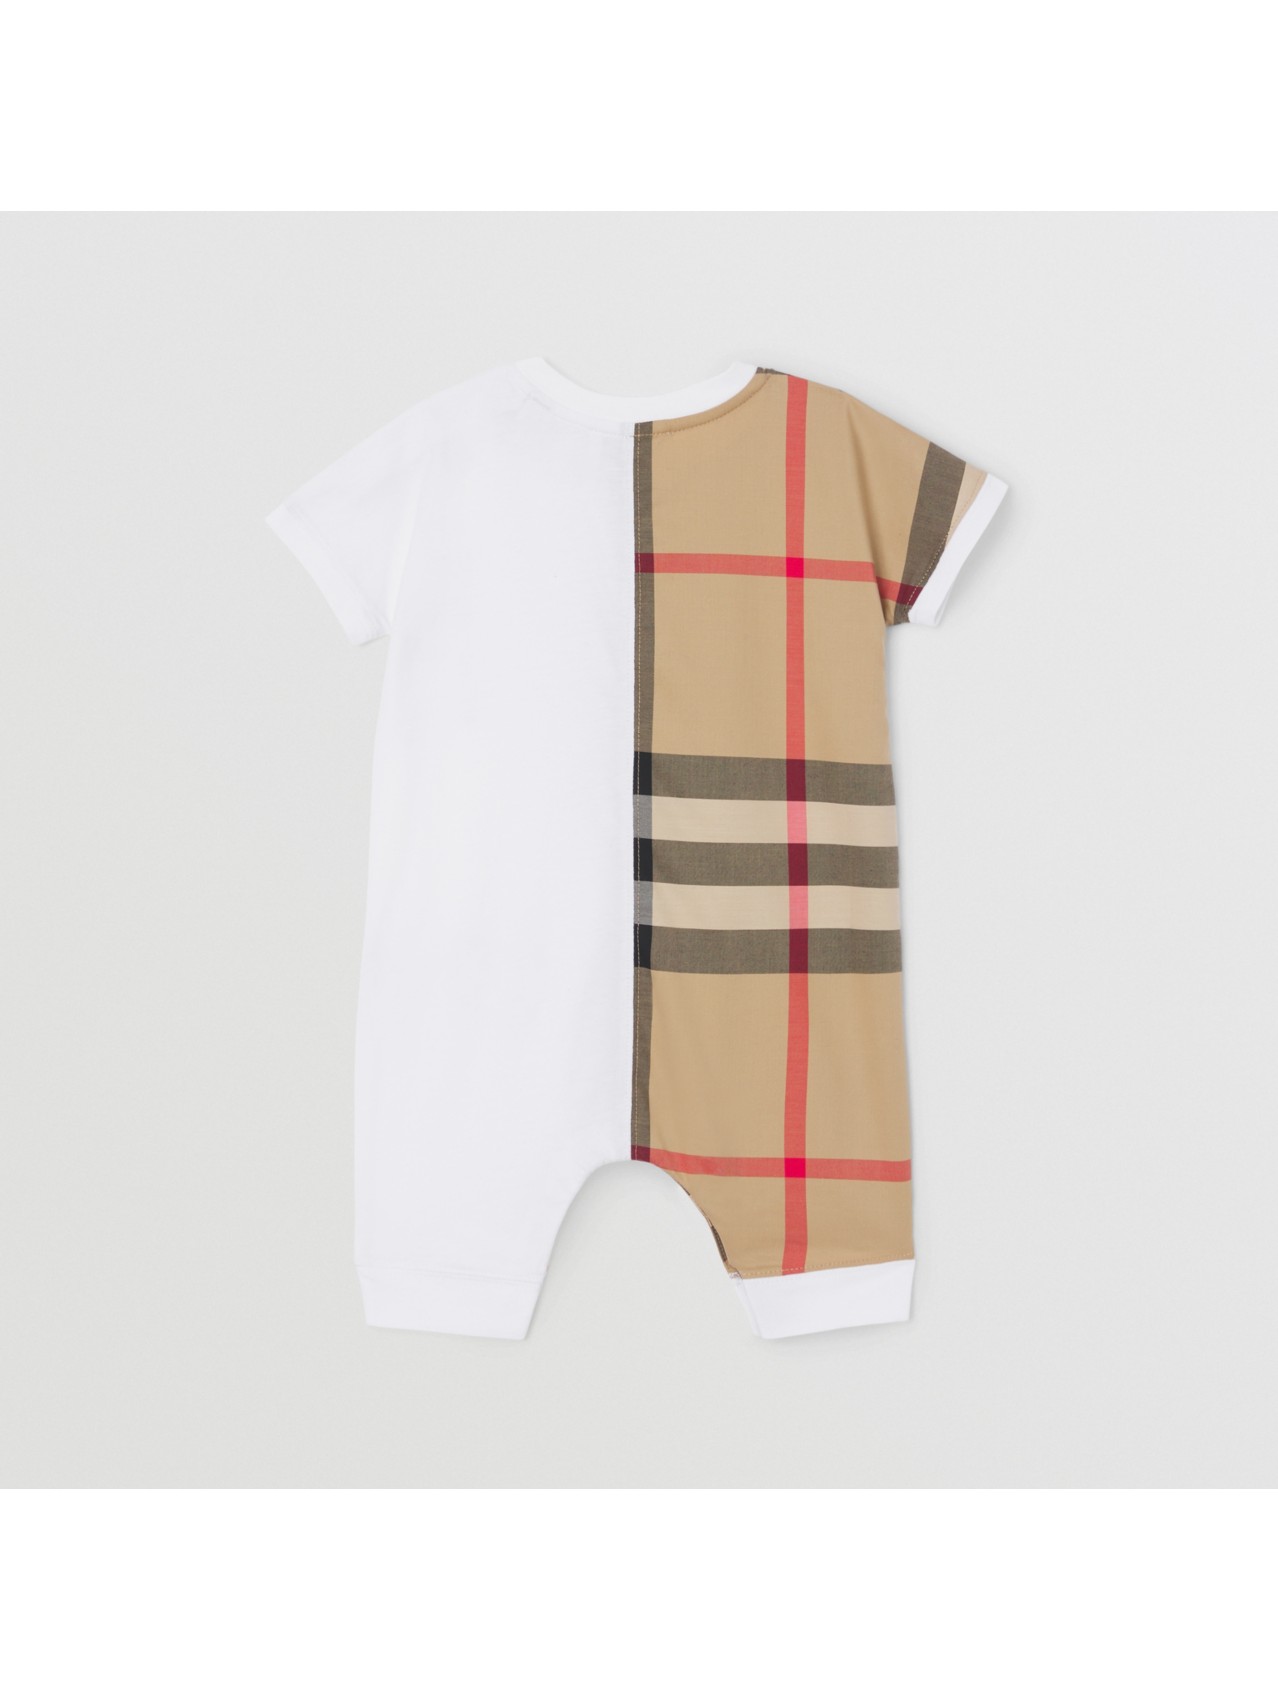 Baby Designer Clothing Burberry Baby |